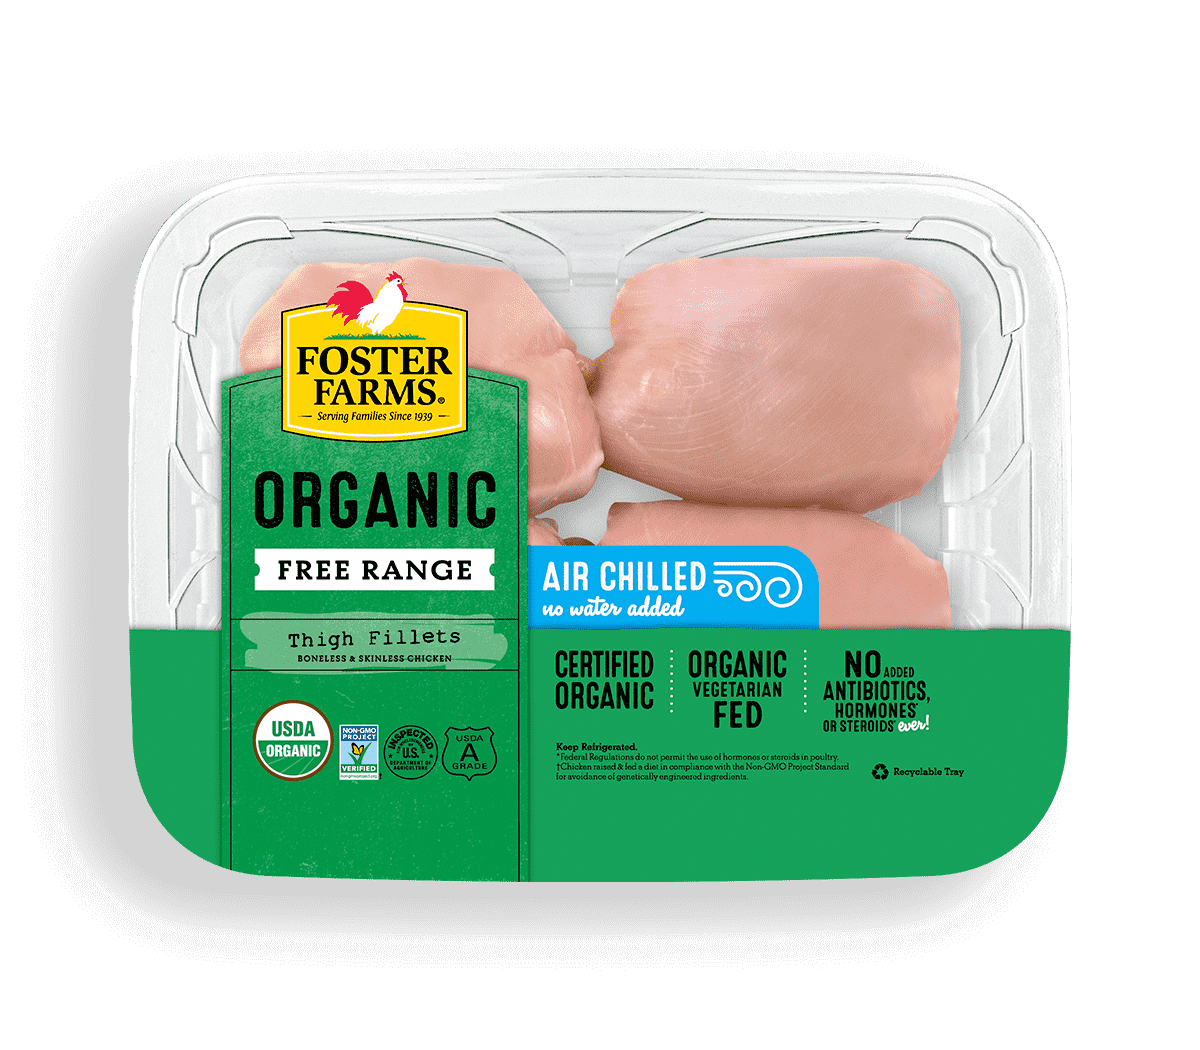 Organic Boneless Skinless Chicken Thigh Fillets